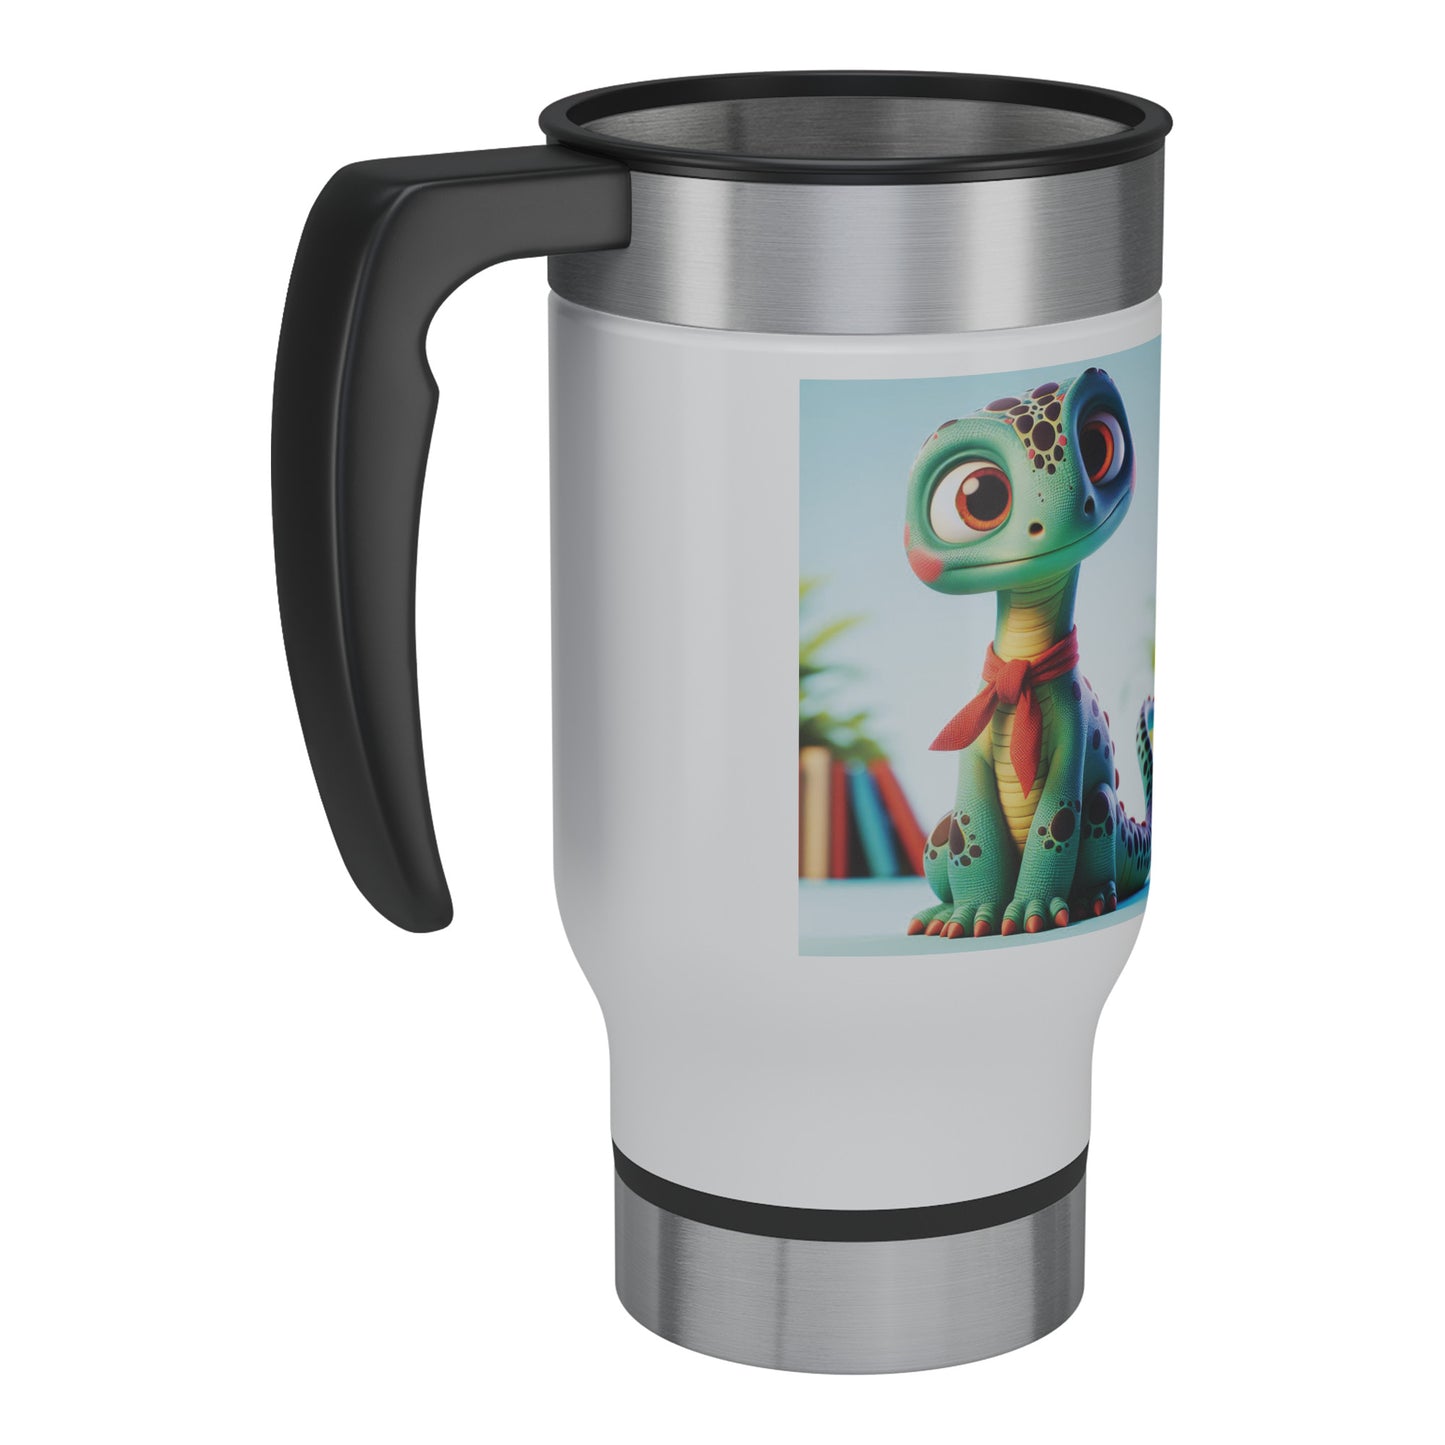 Adorable & Charming Dinosaurs - Travel Mug - Dinosaur #1